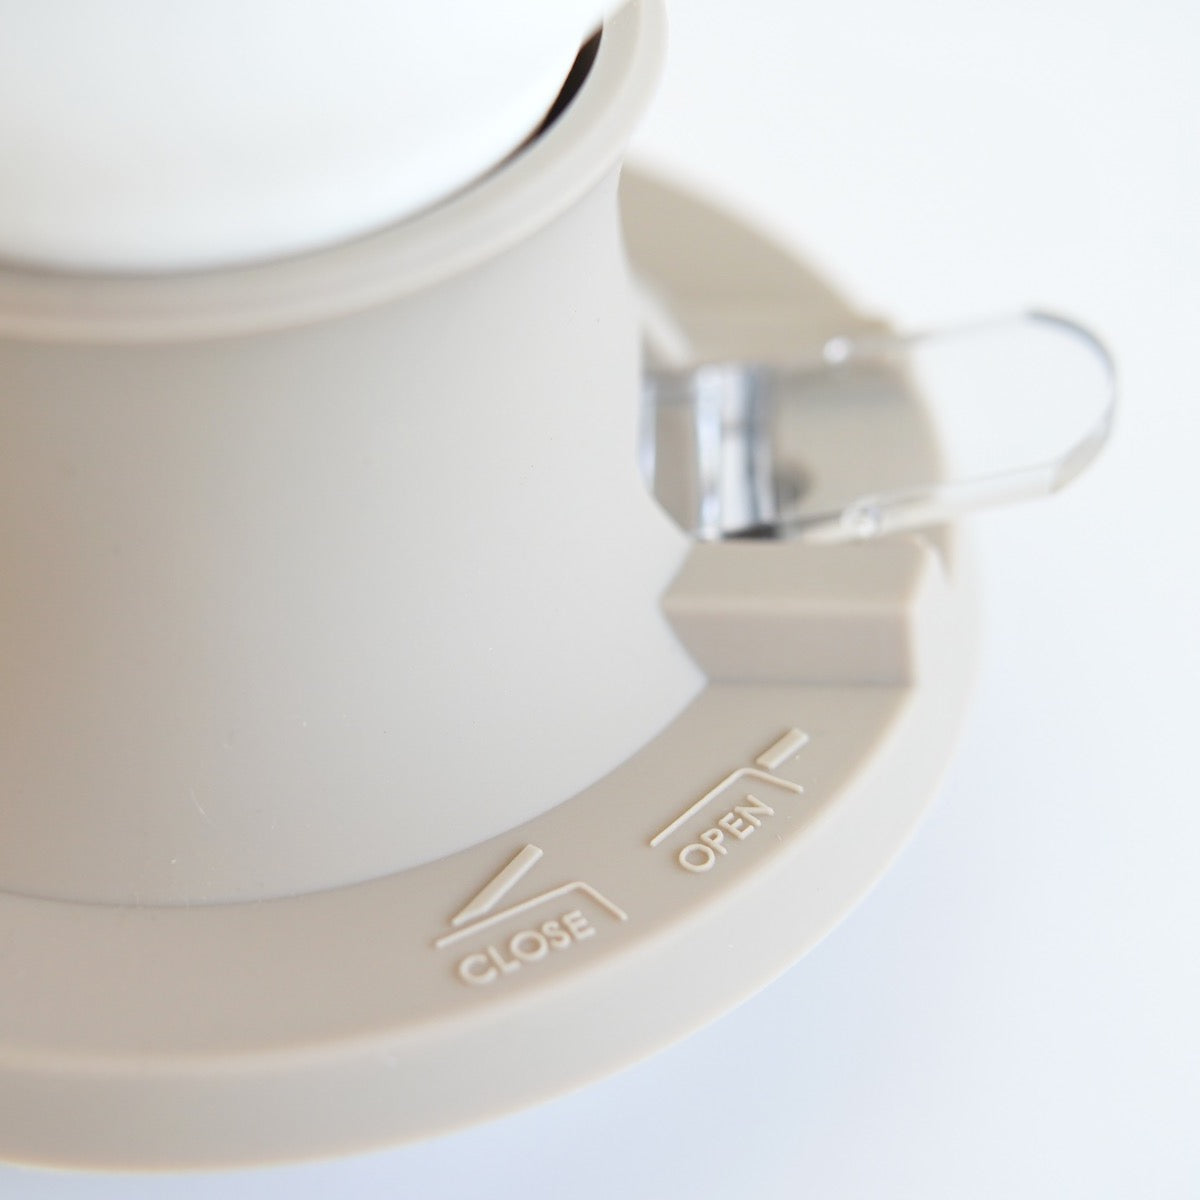 HARIO x Lin's Ceramics Studio Swtich Immersion Coffee Dripper On-Off Switch